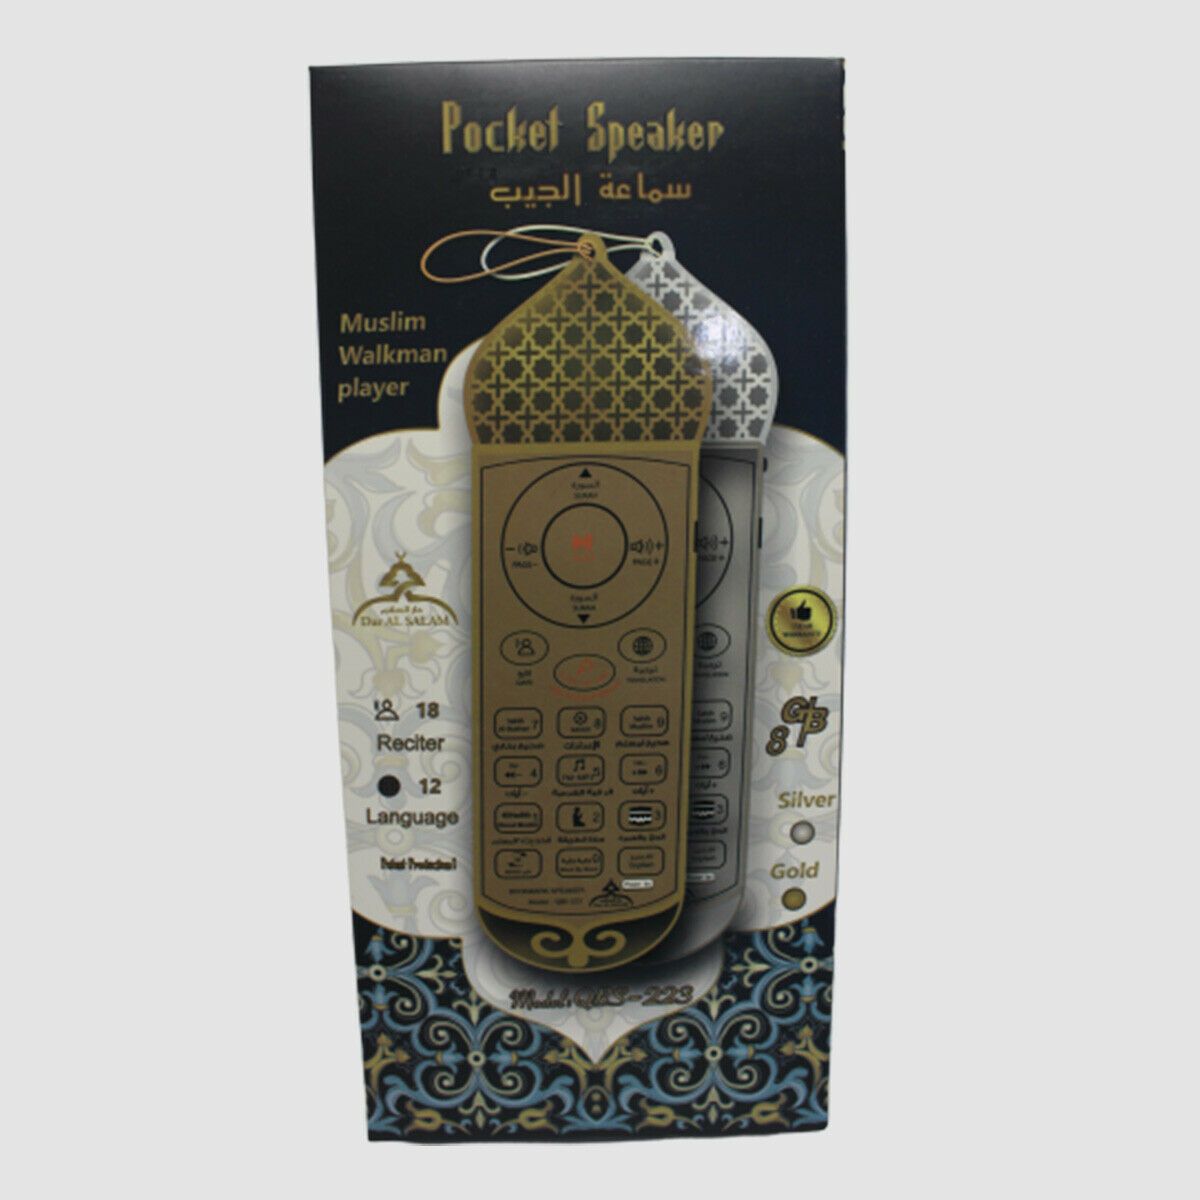 Pocket Quran Speaker, Muslim Walkman Player, 12 languages 18 reciter 8GB MP3, FM-almanaar Islamic Store